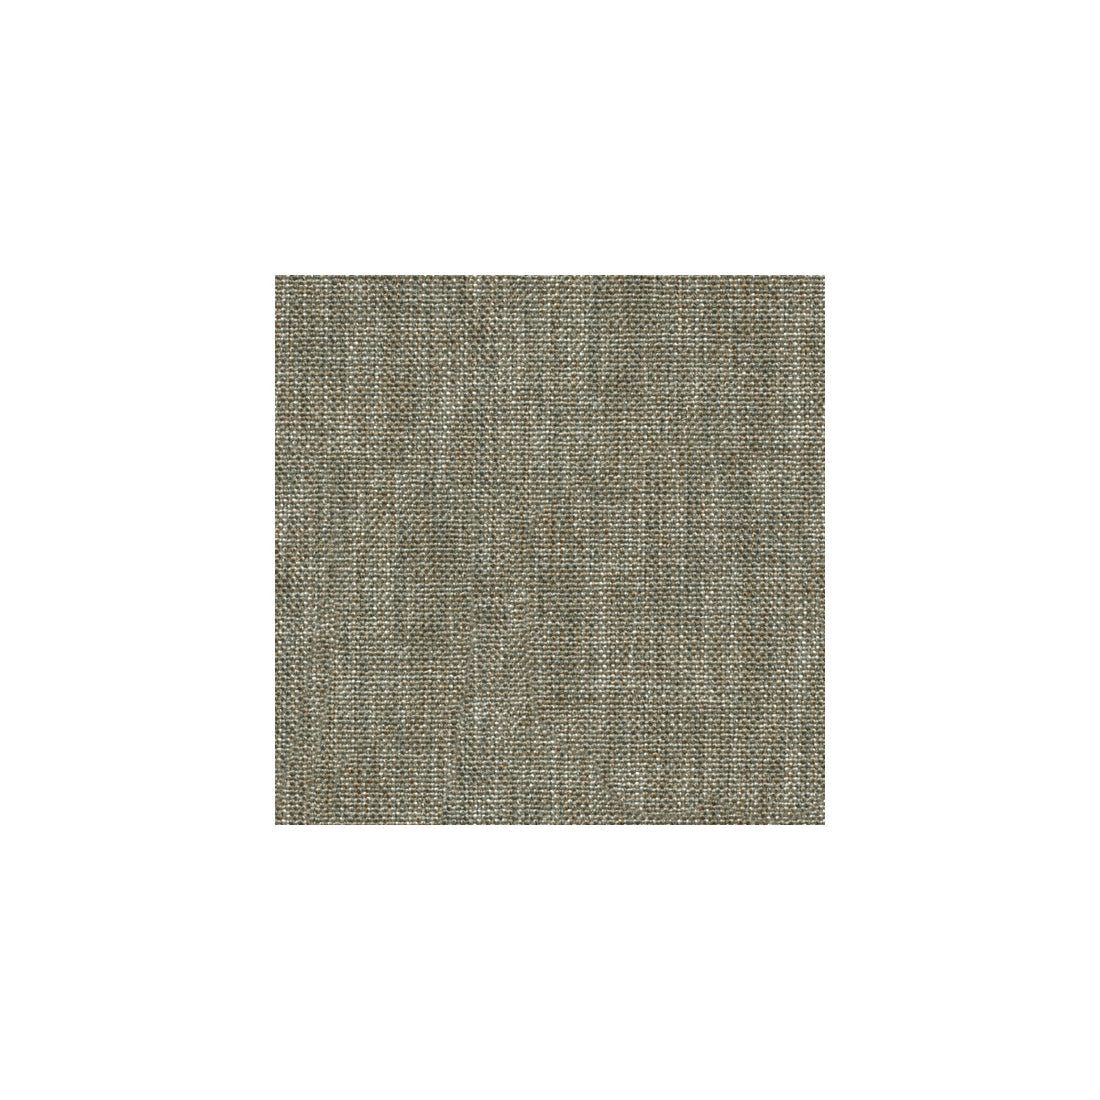 Kravet Smart fabric in 32959-21 color - pattern 32959.21.0 - by Kravet Smart